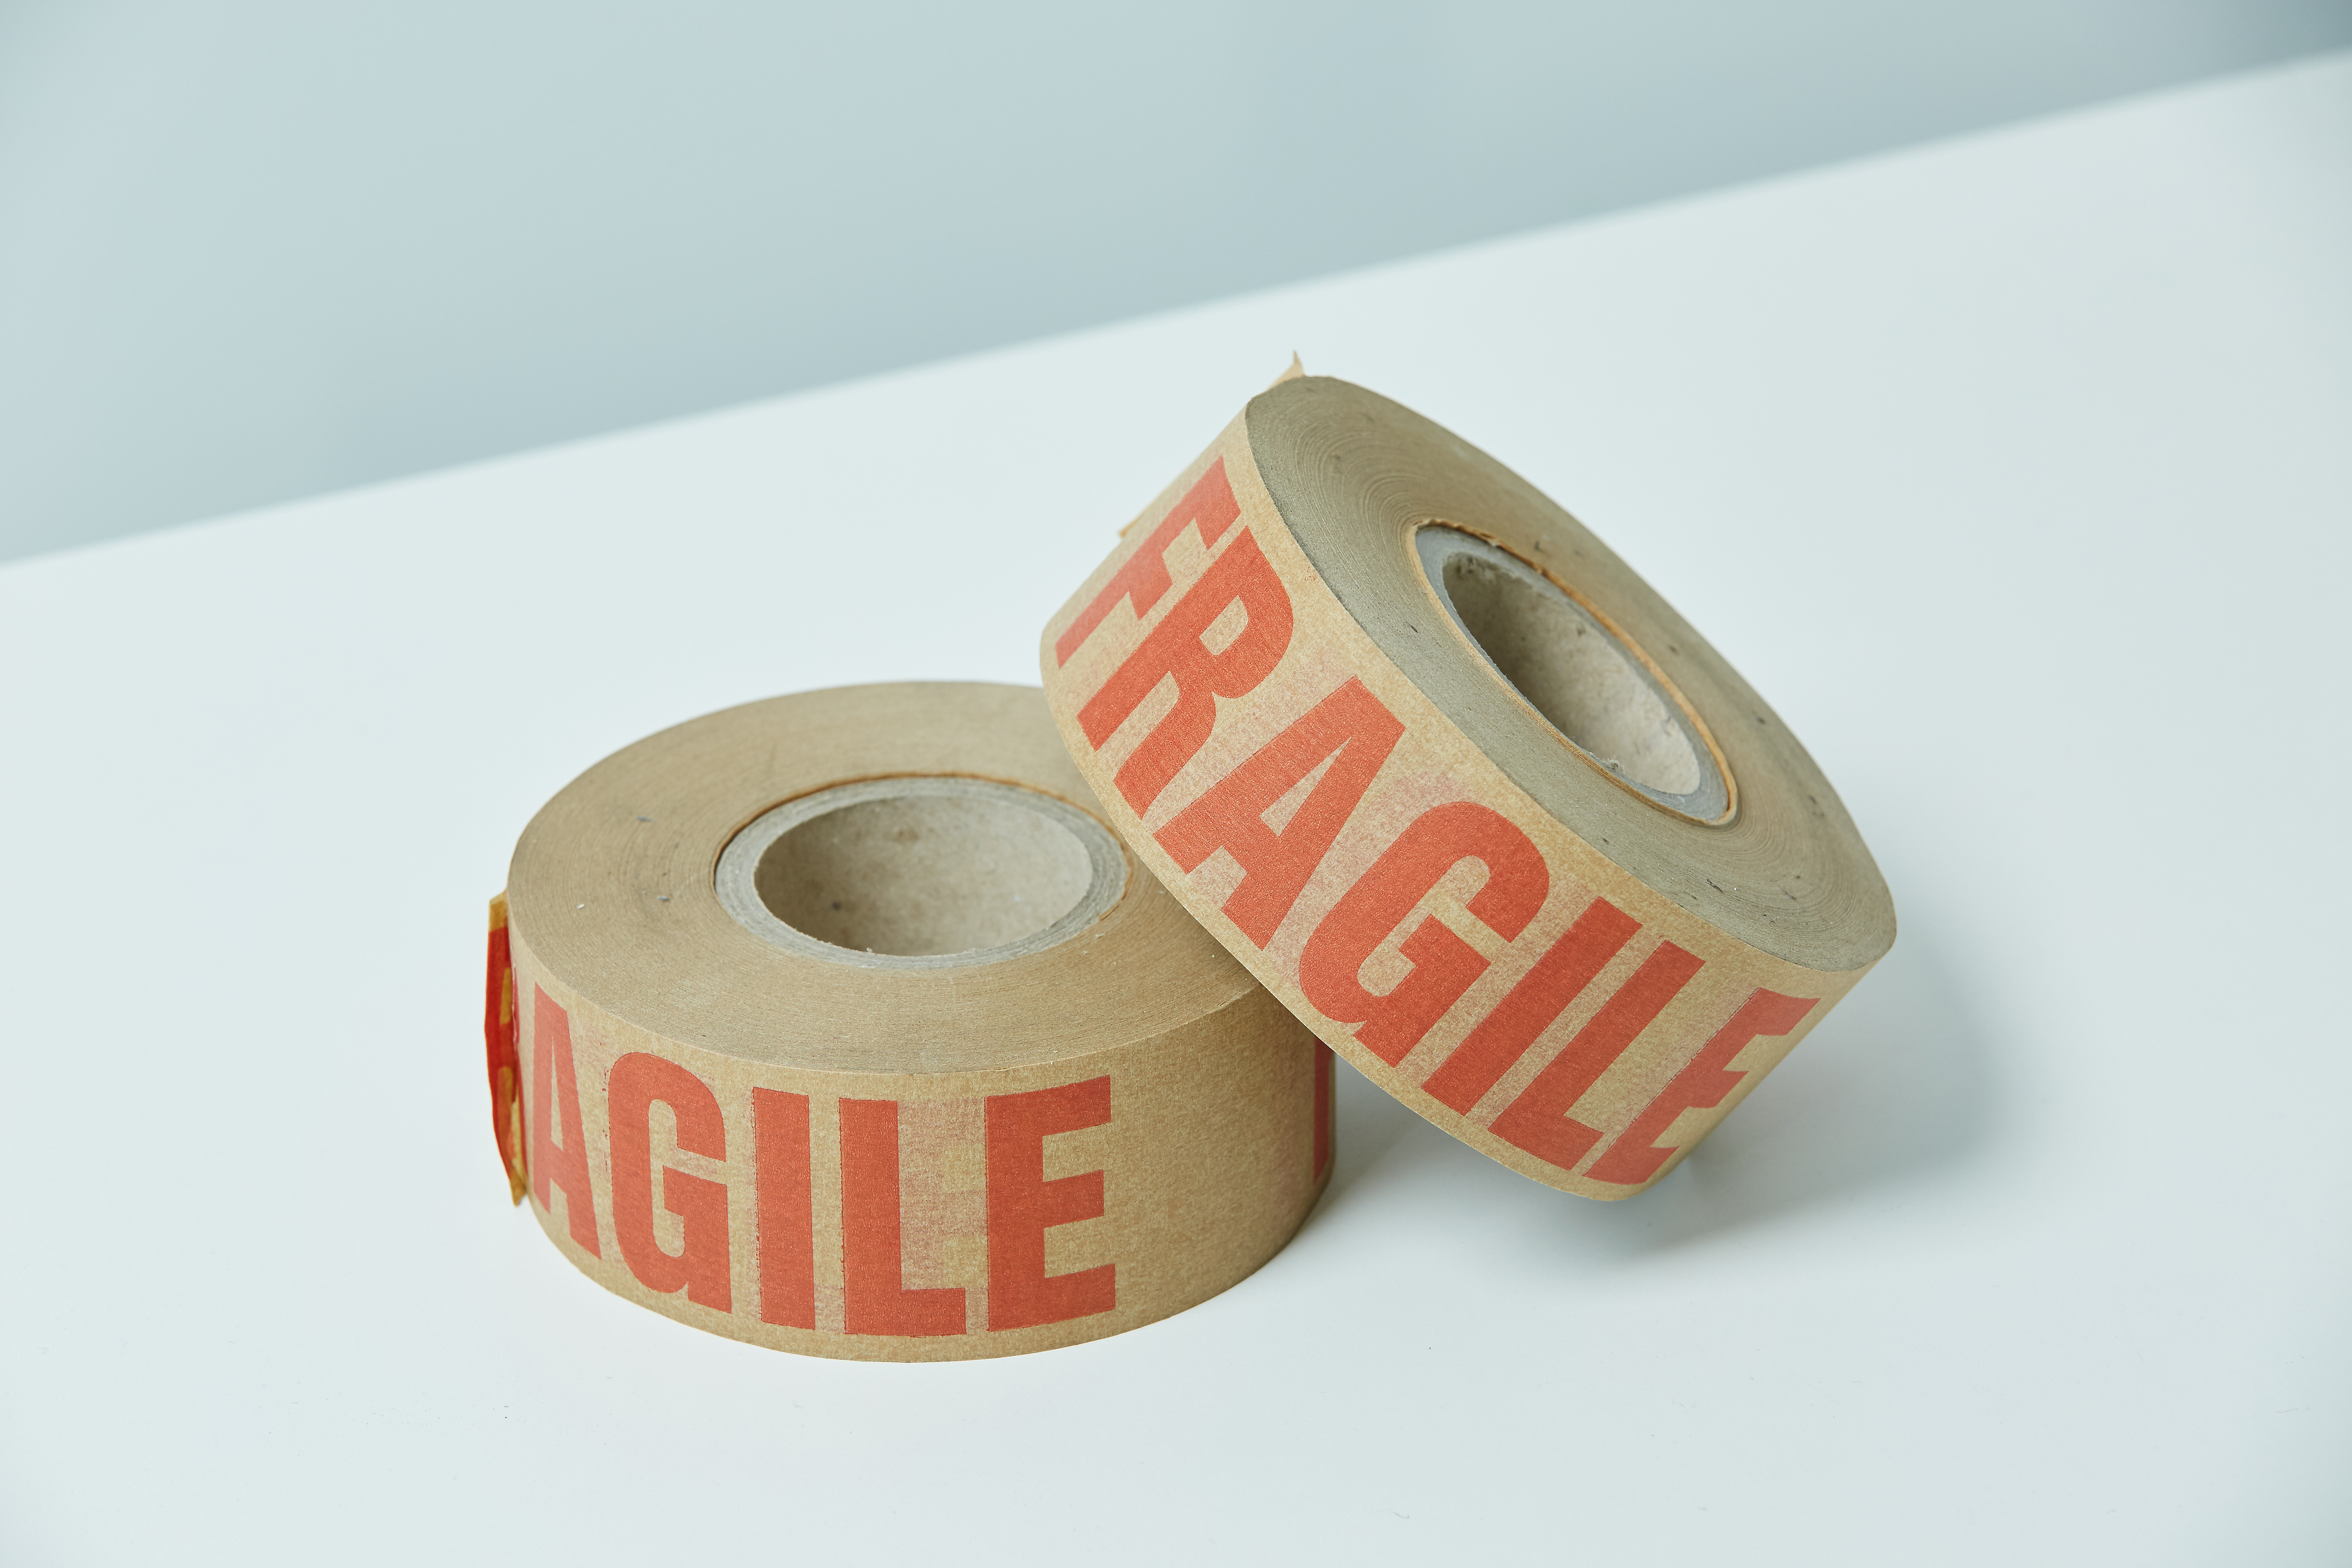 Fragile Printed E-Tape Paper Tape